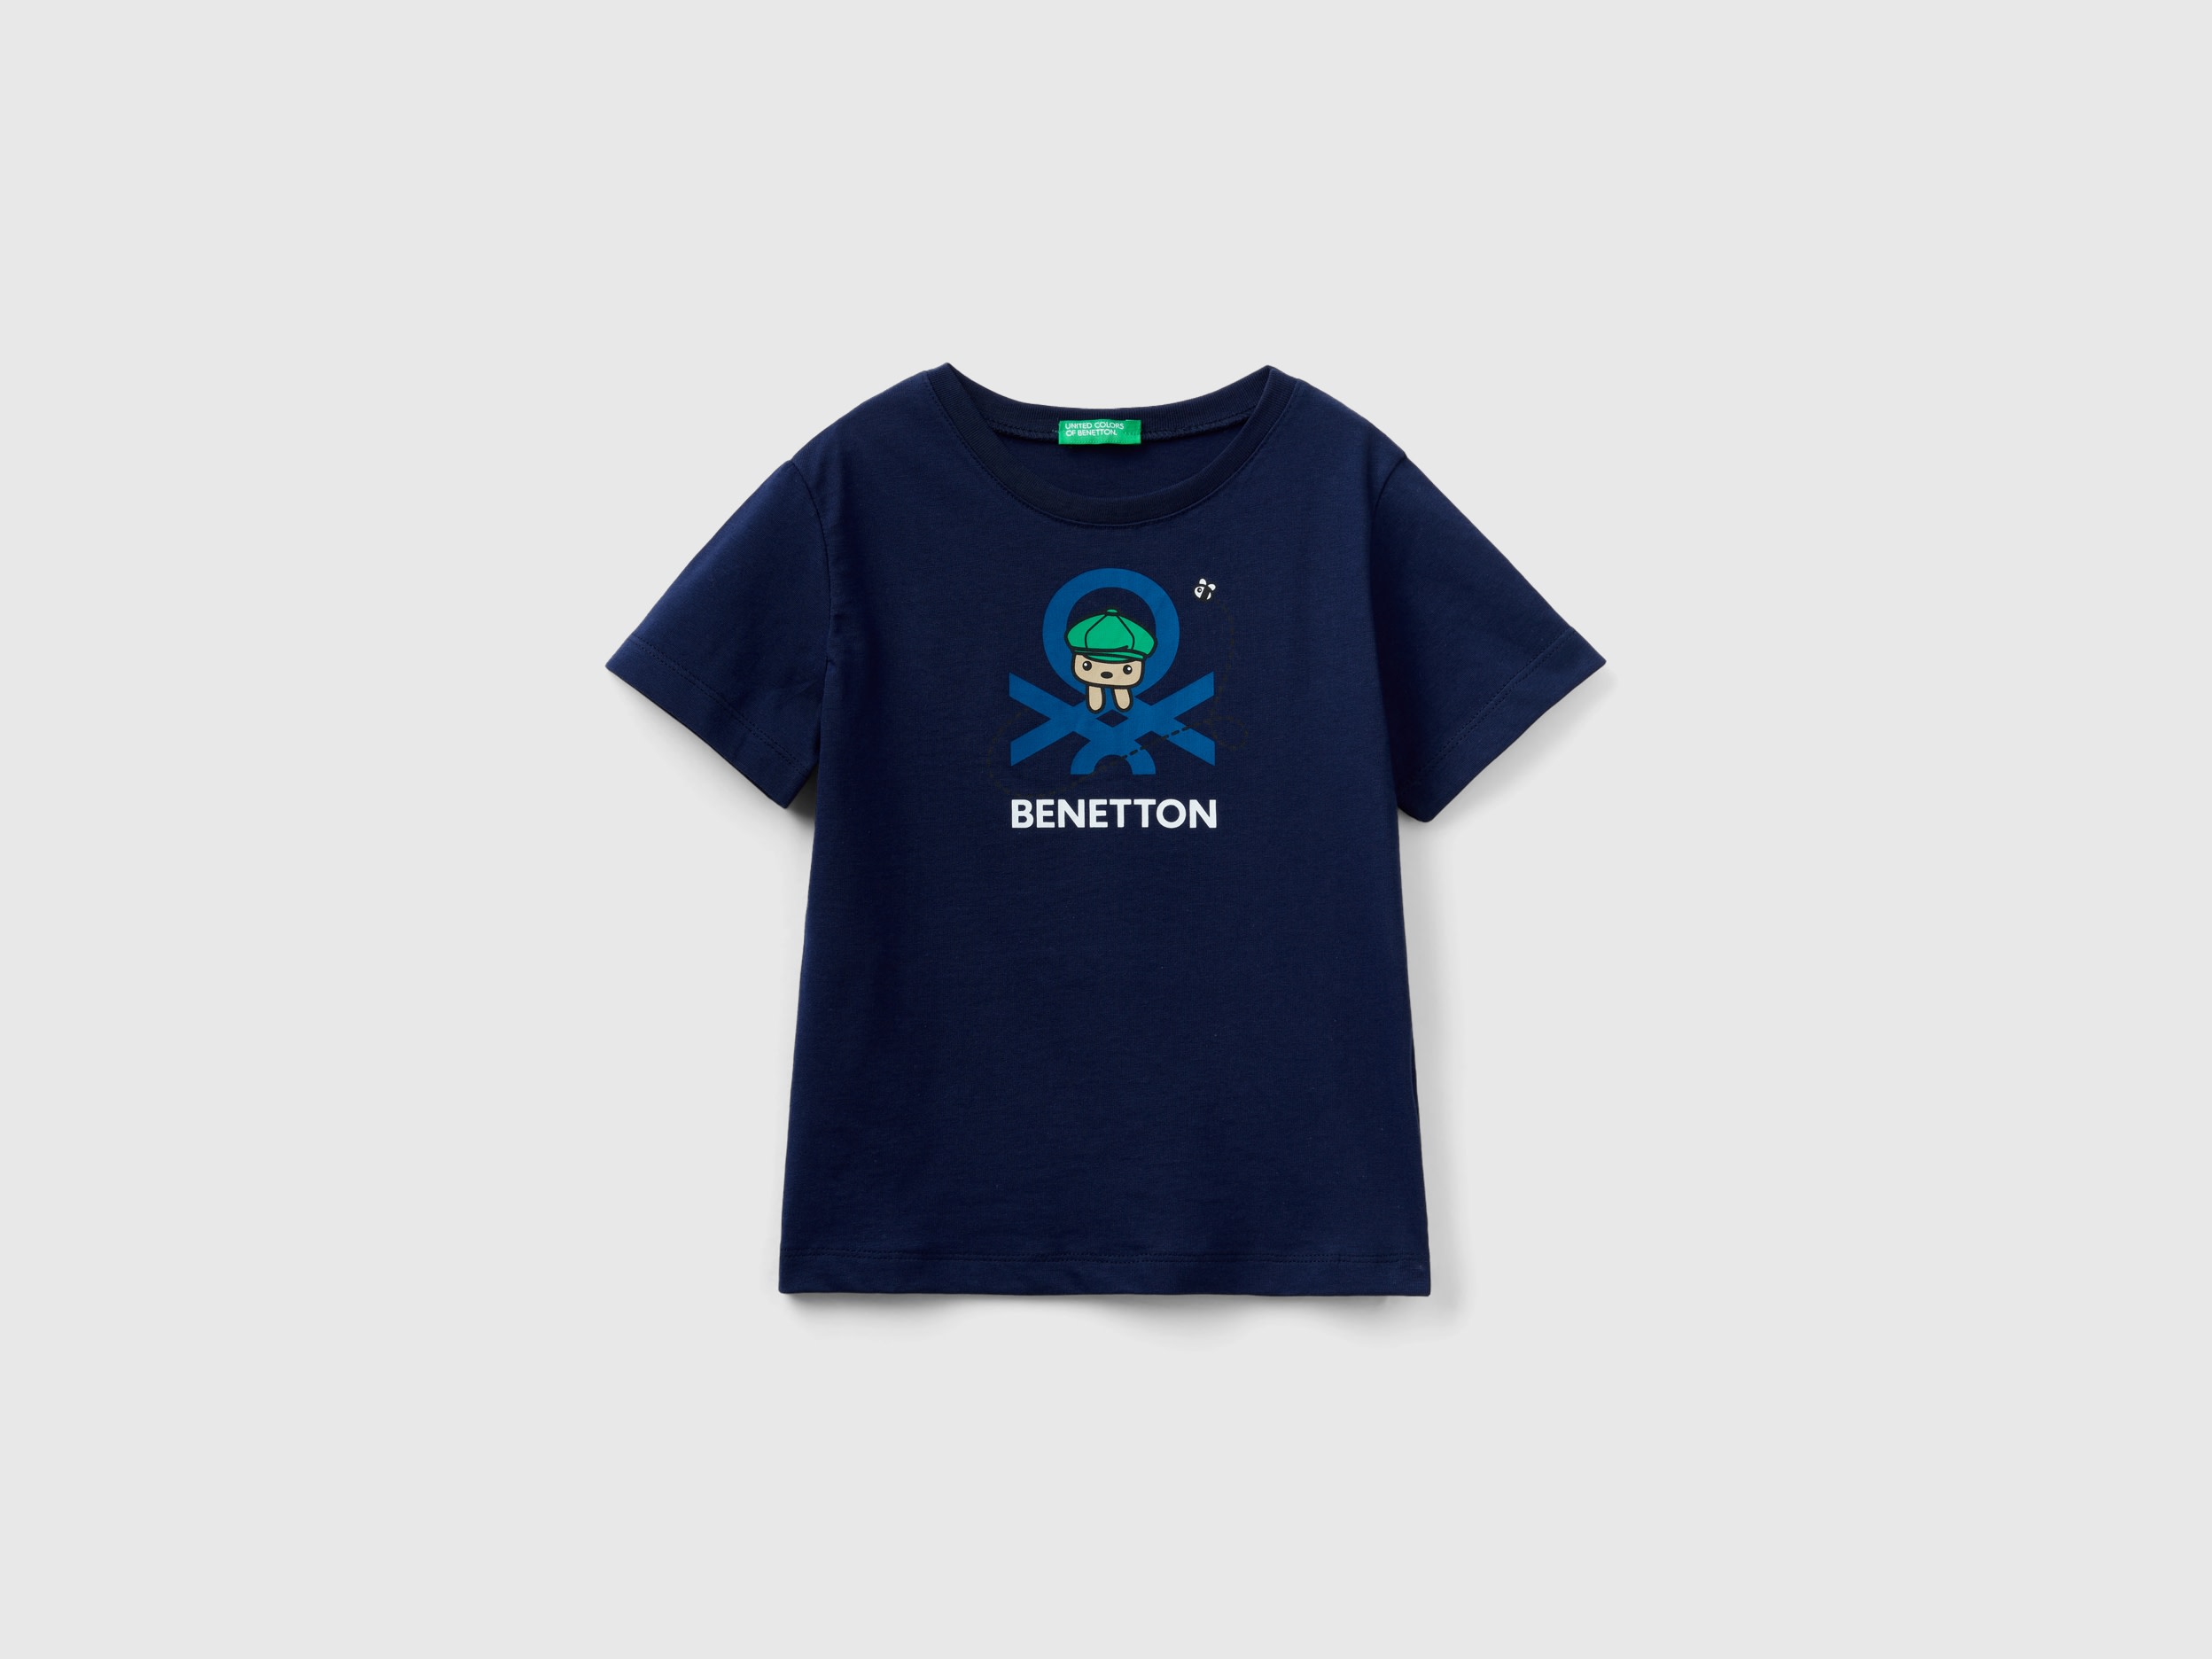 Benetton, T-shirt With Print In 100% Organic Cotton, size 5-6, Dark Blue, Kids